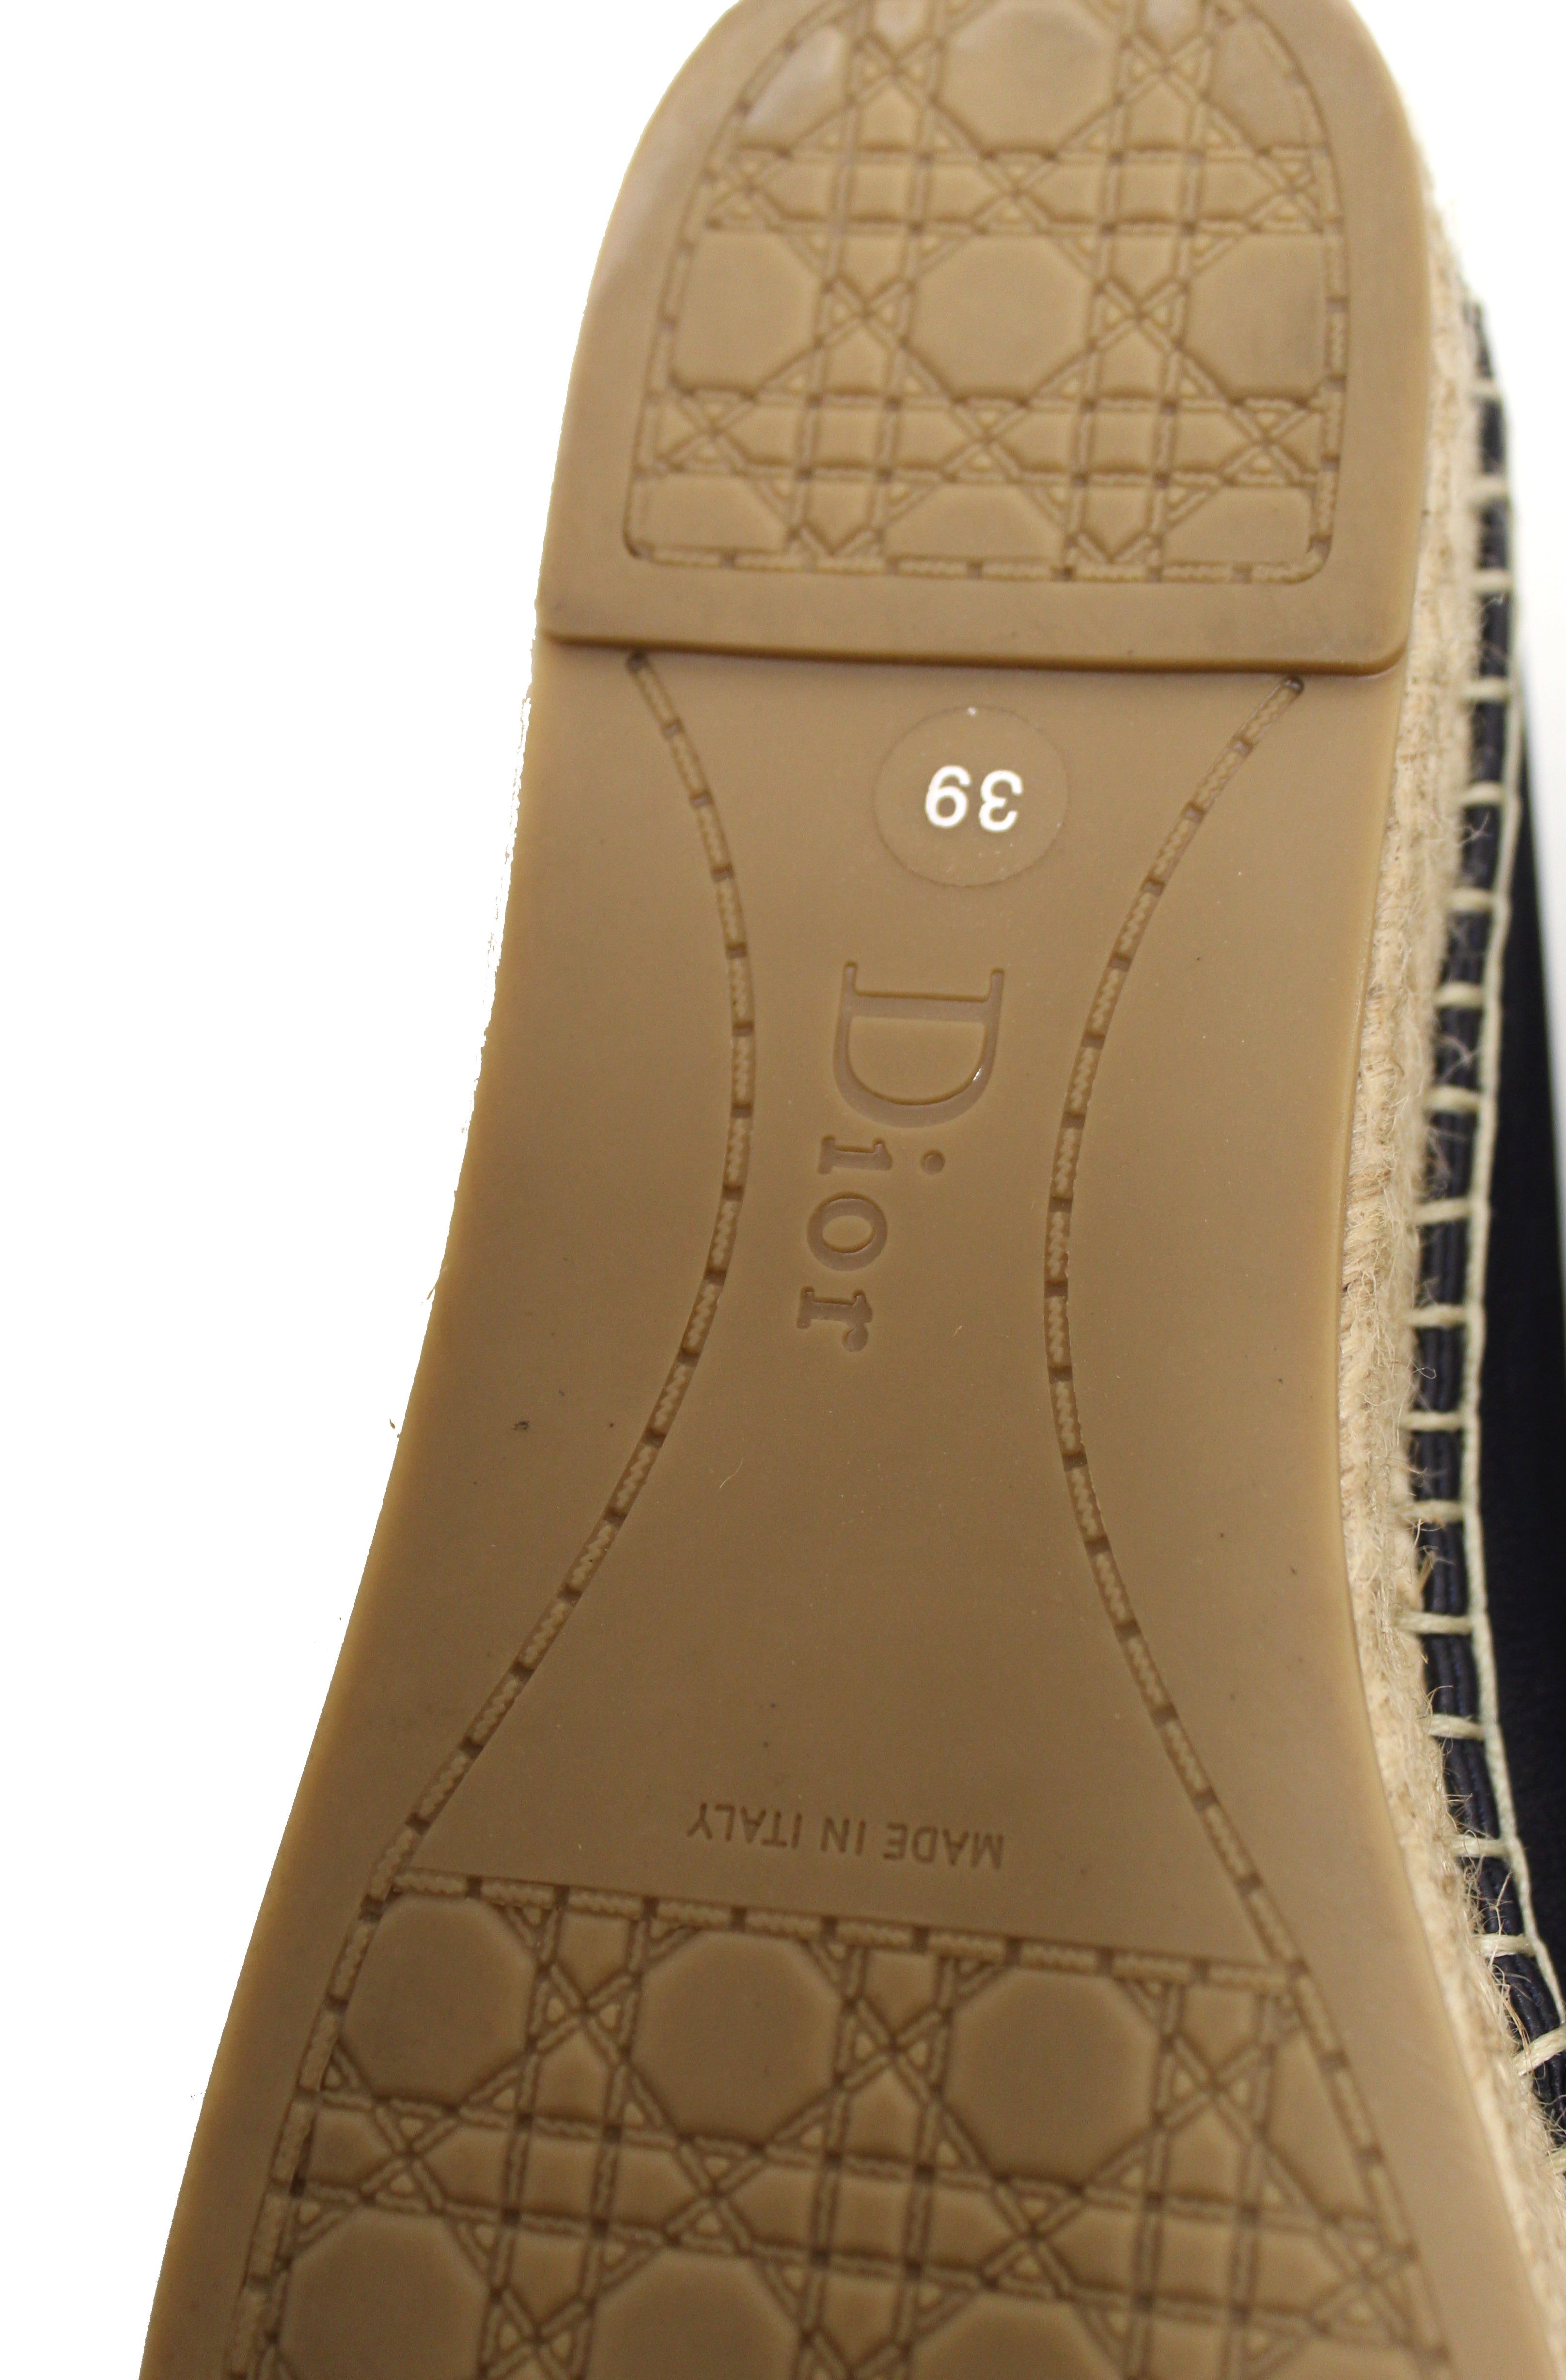 Authentic Christian Dior Blue Nappa Leather Denim Espadrille Shoes Size 39